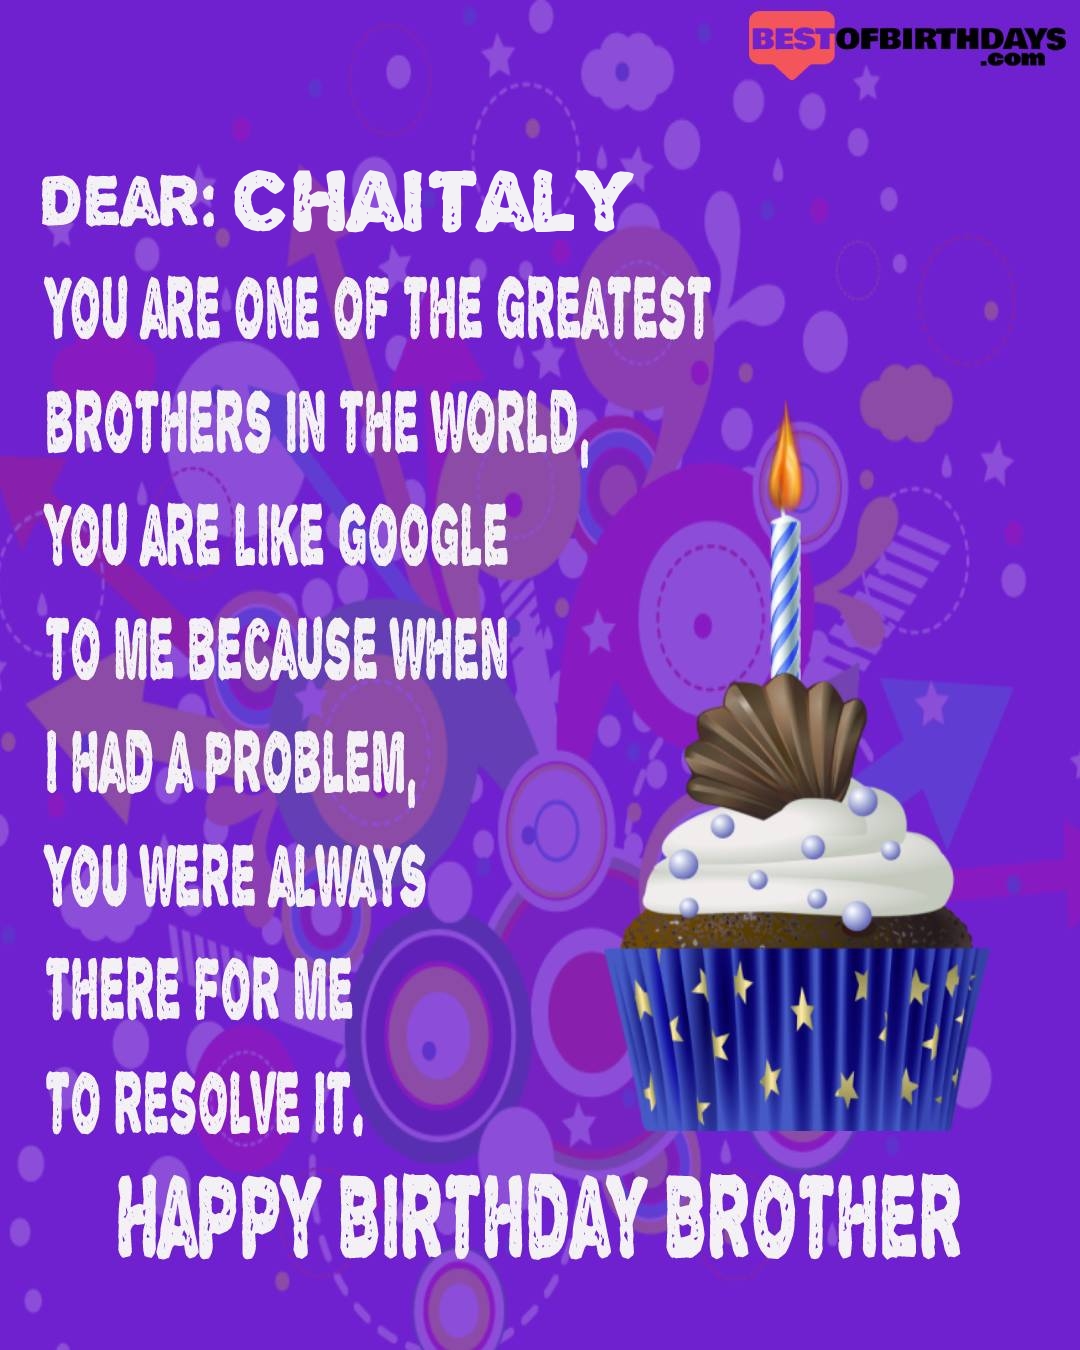 Happy birthday chaitaly bhai brother bro